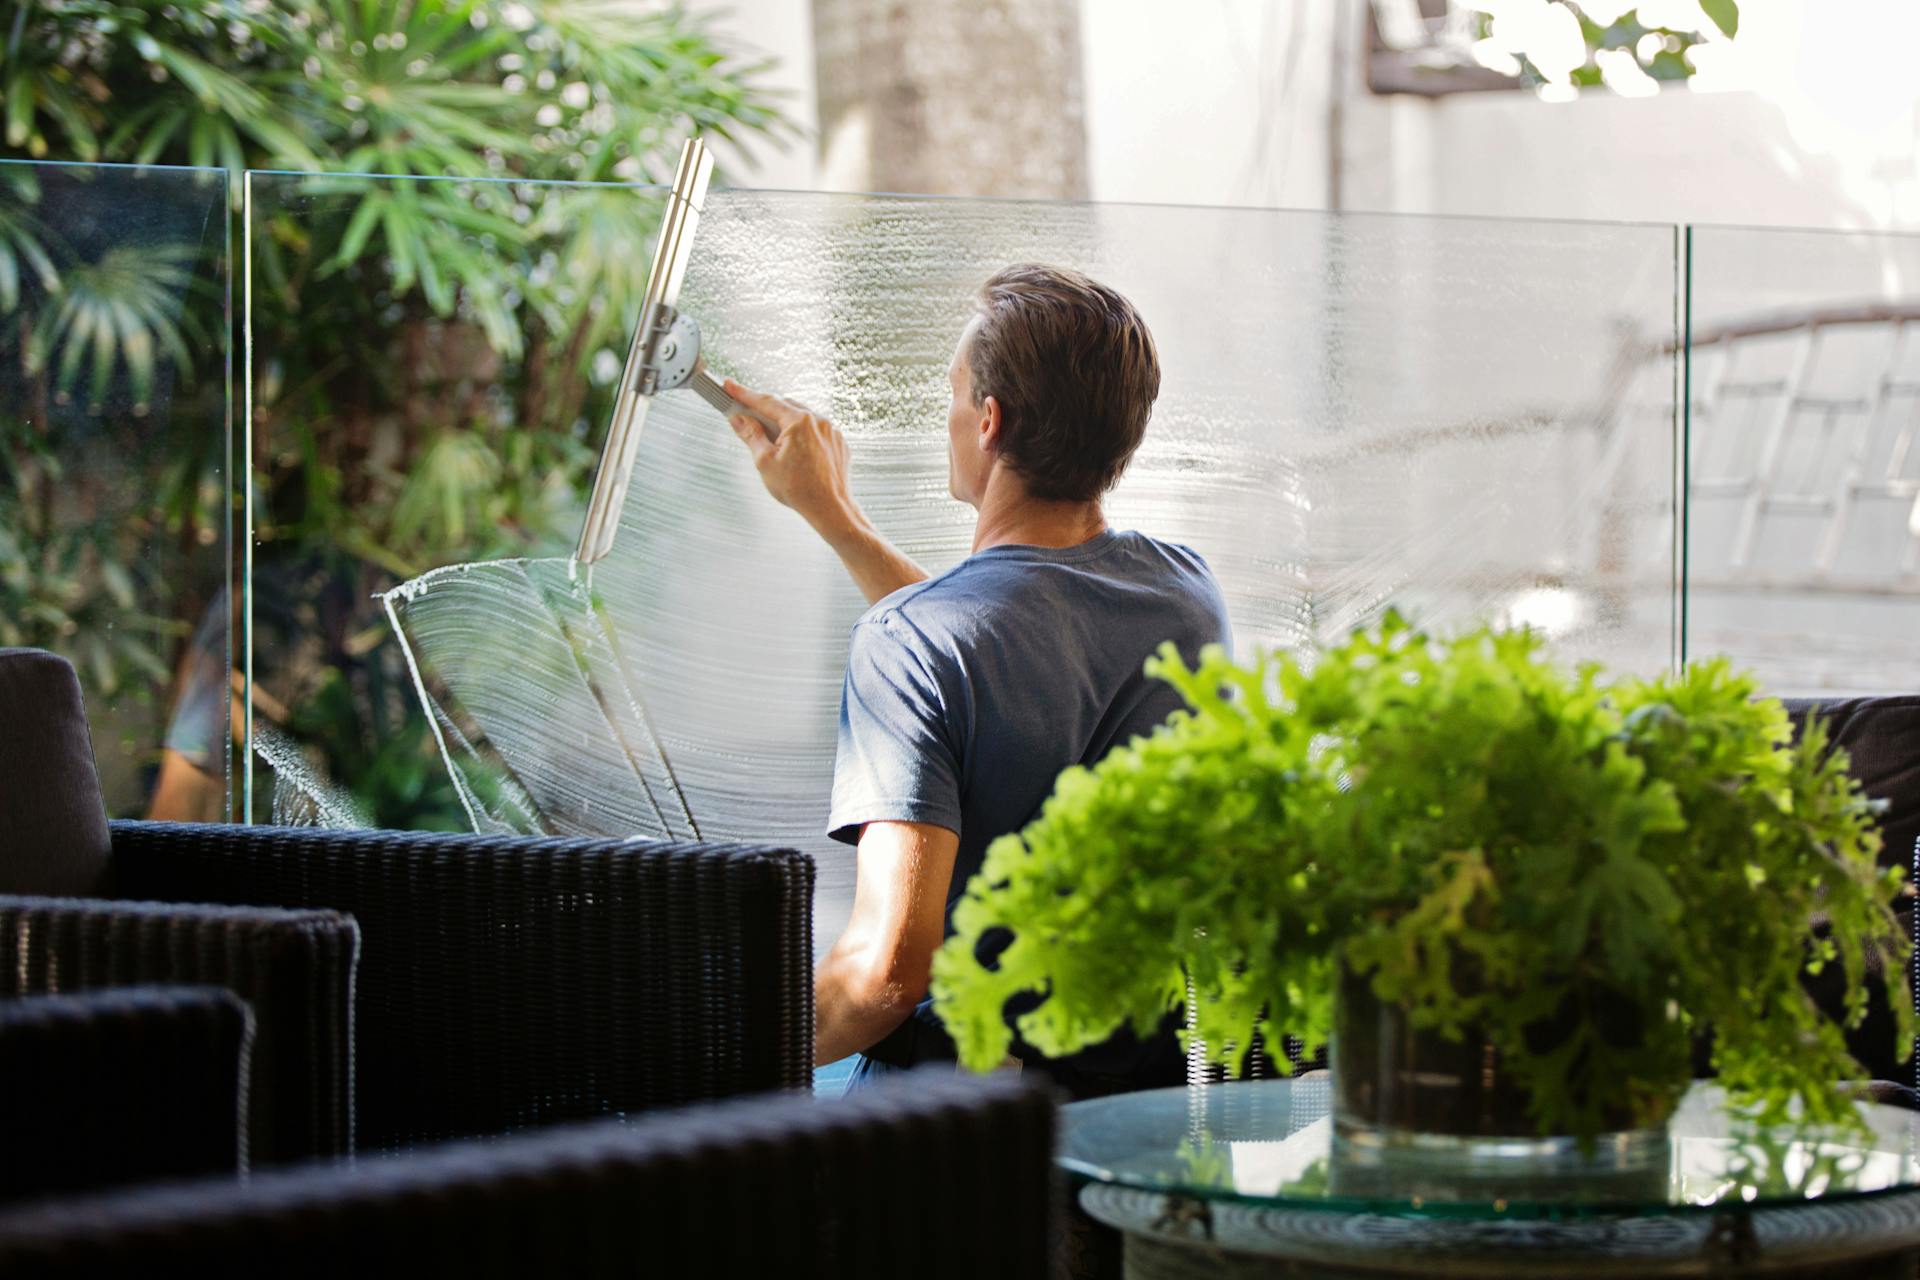 Man cleaning windows | Source: Pexels